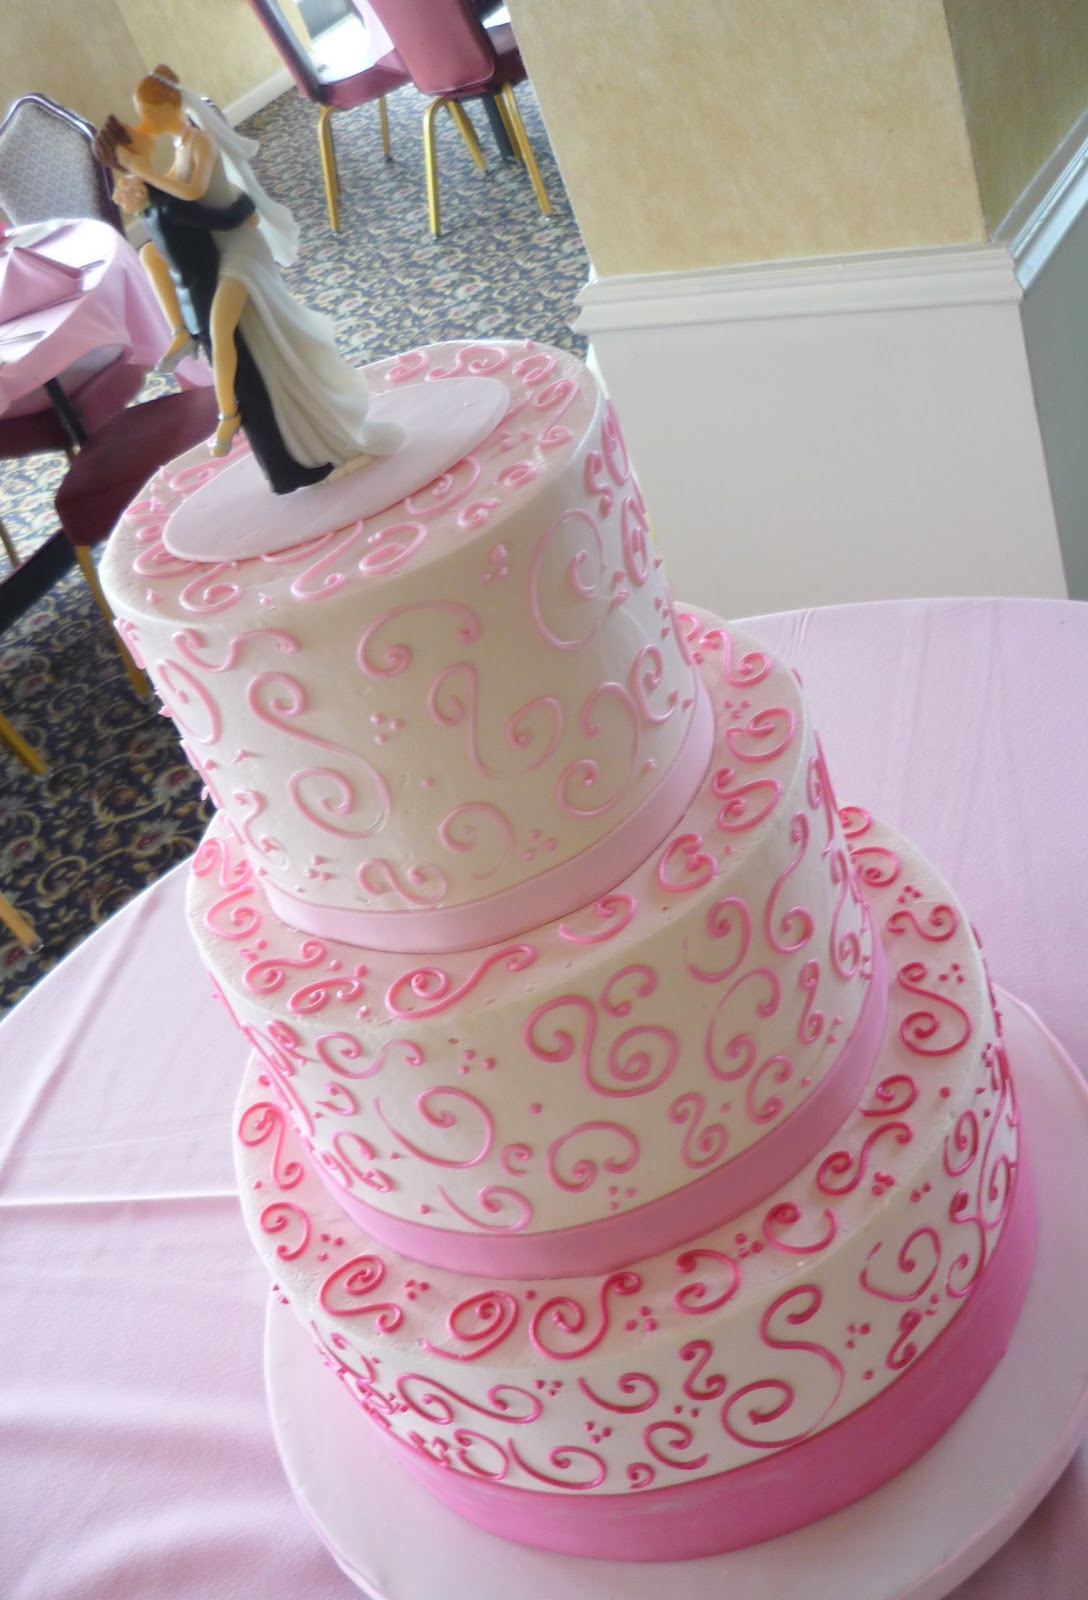 http://3.bp.blogspot.com/-lApMiOmMZuQ/T4yBLyx4vNI/AAAAAAAABVw/dUAi9Hmglag/s1600/ombre+wedding+cake+swirls+whimsical+pink+fushia+bubblegum+pink.jpg